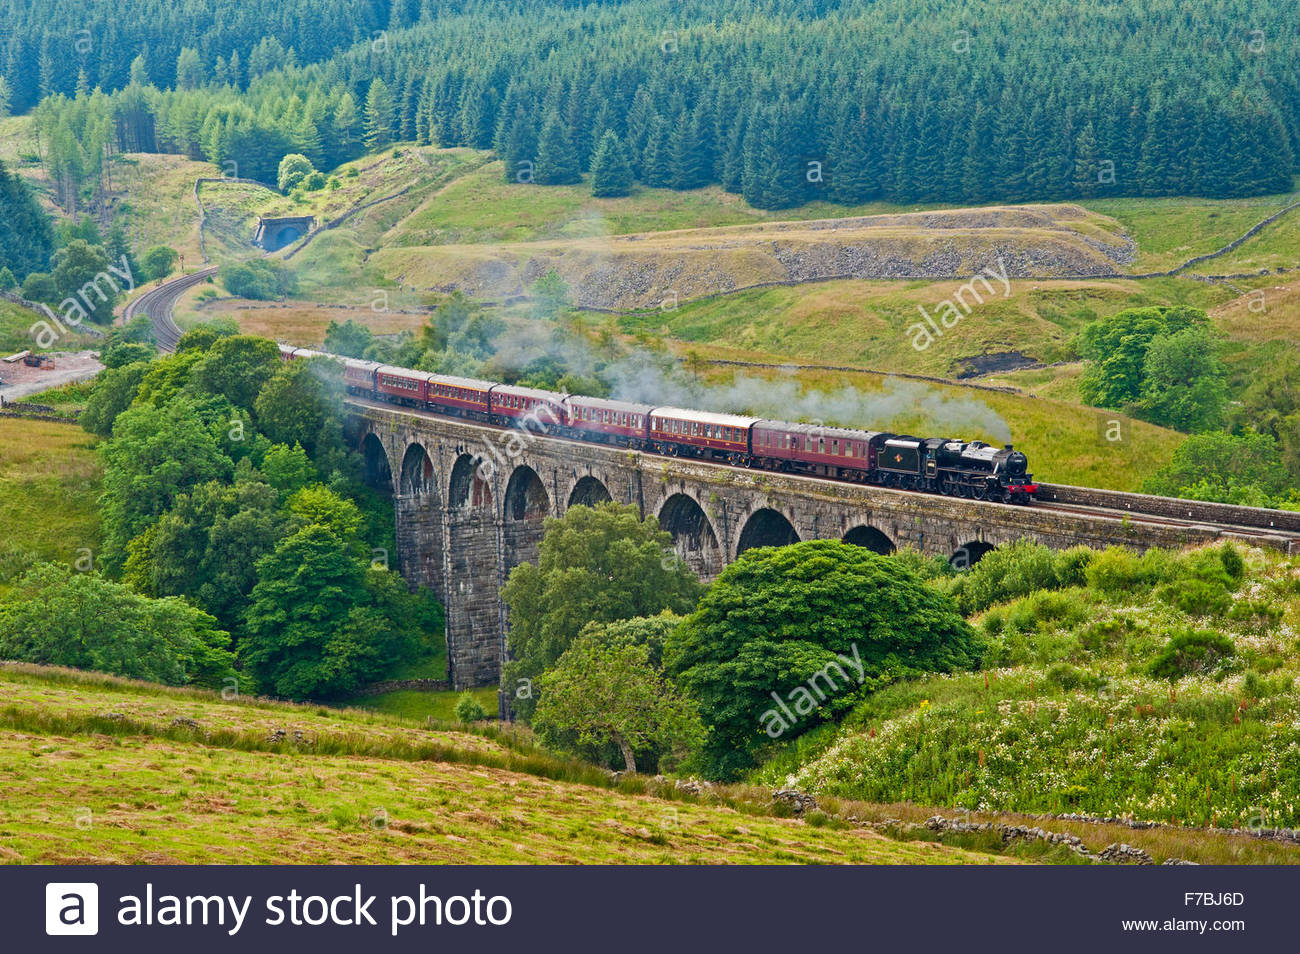 steam-train-on-dent-head-viaduct-settle-to-carlisle-railway-F7BJ6D.jpg